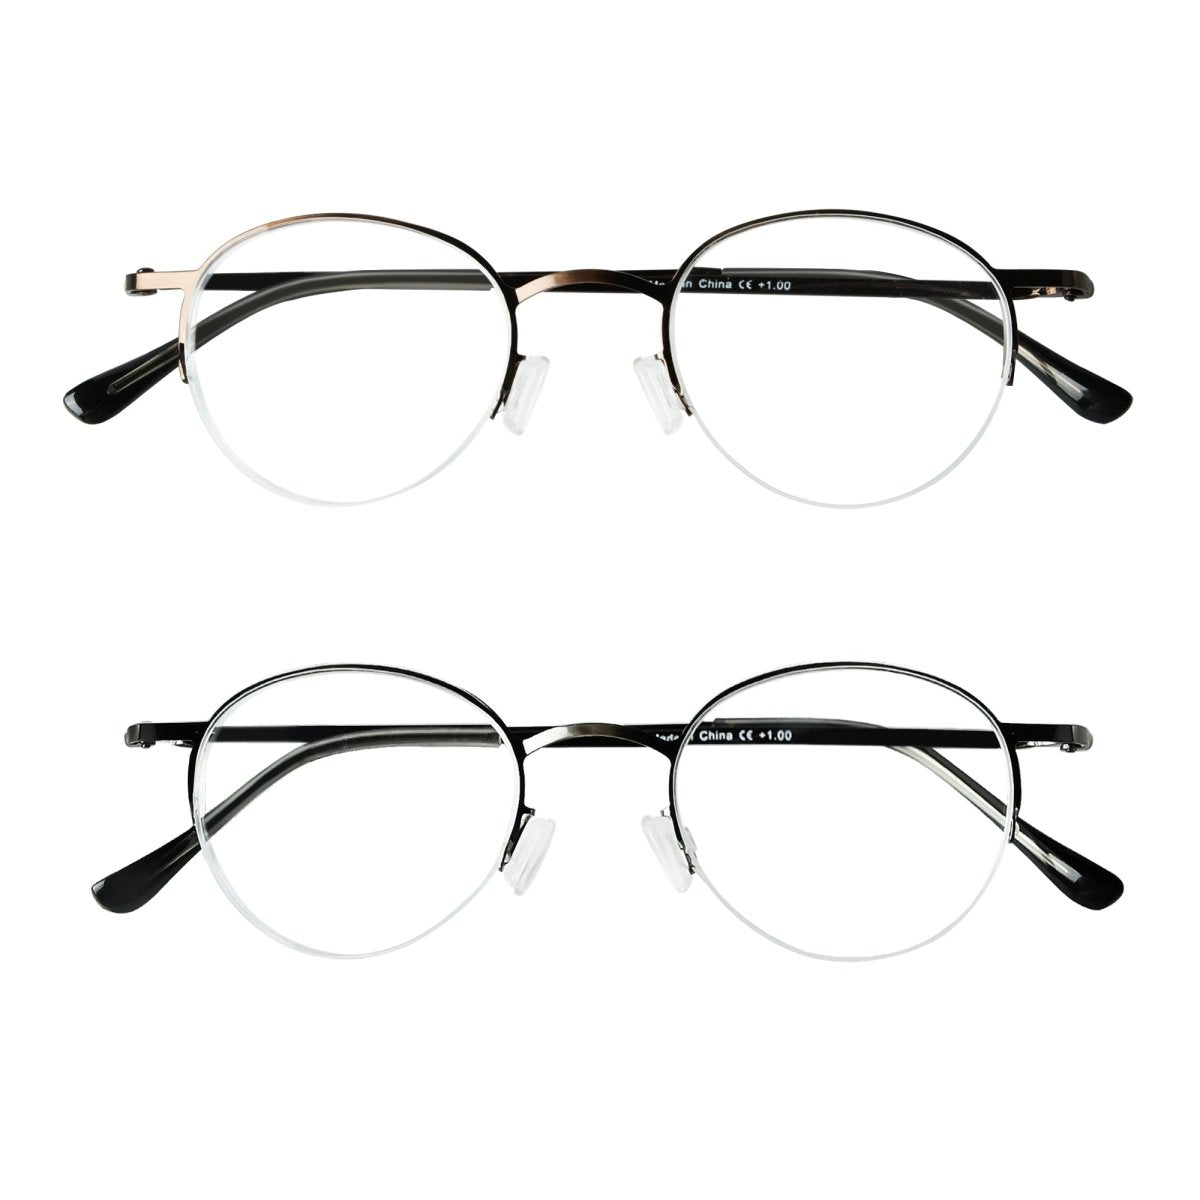 2 Pack Lightweight Reading Glasses Half-rim Readers R15029eyekeeper.com